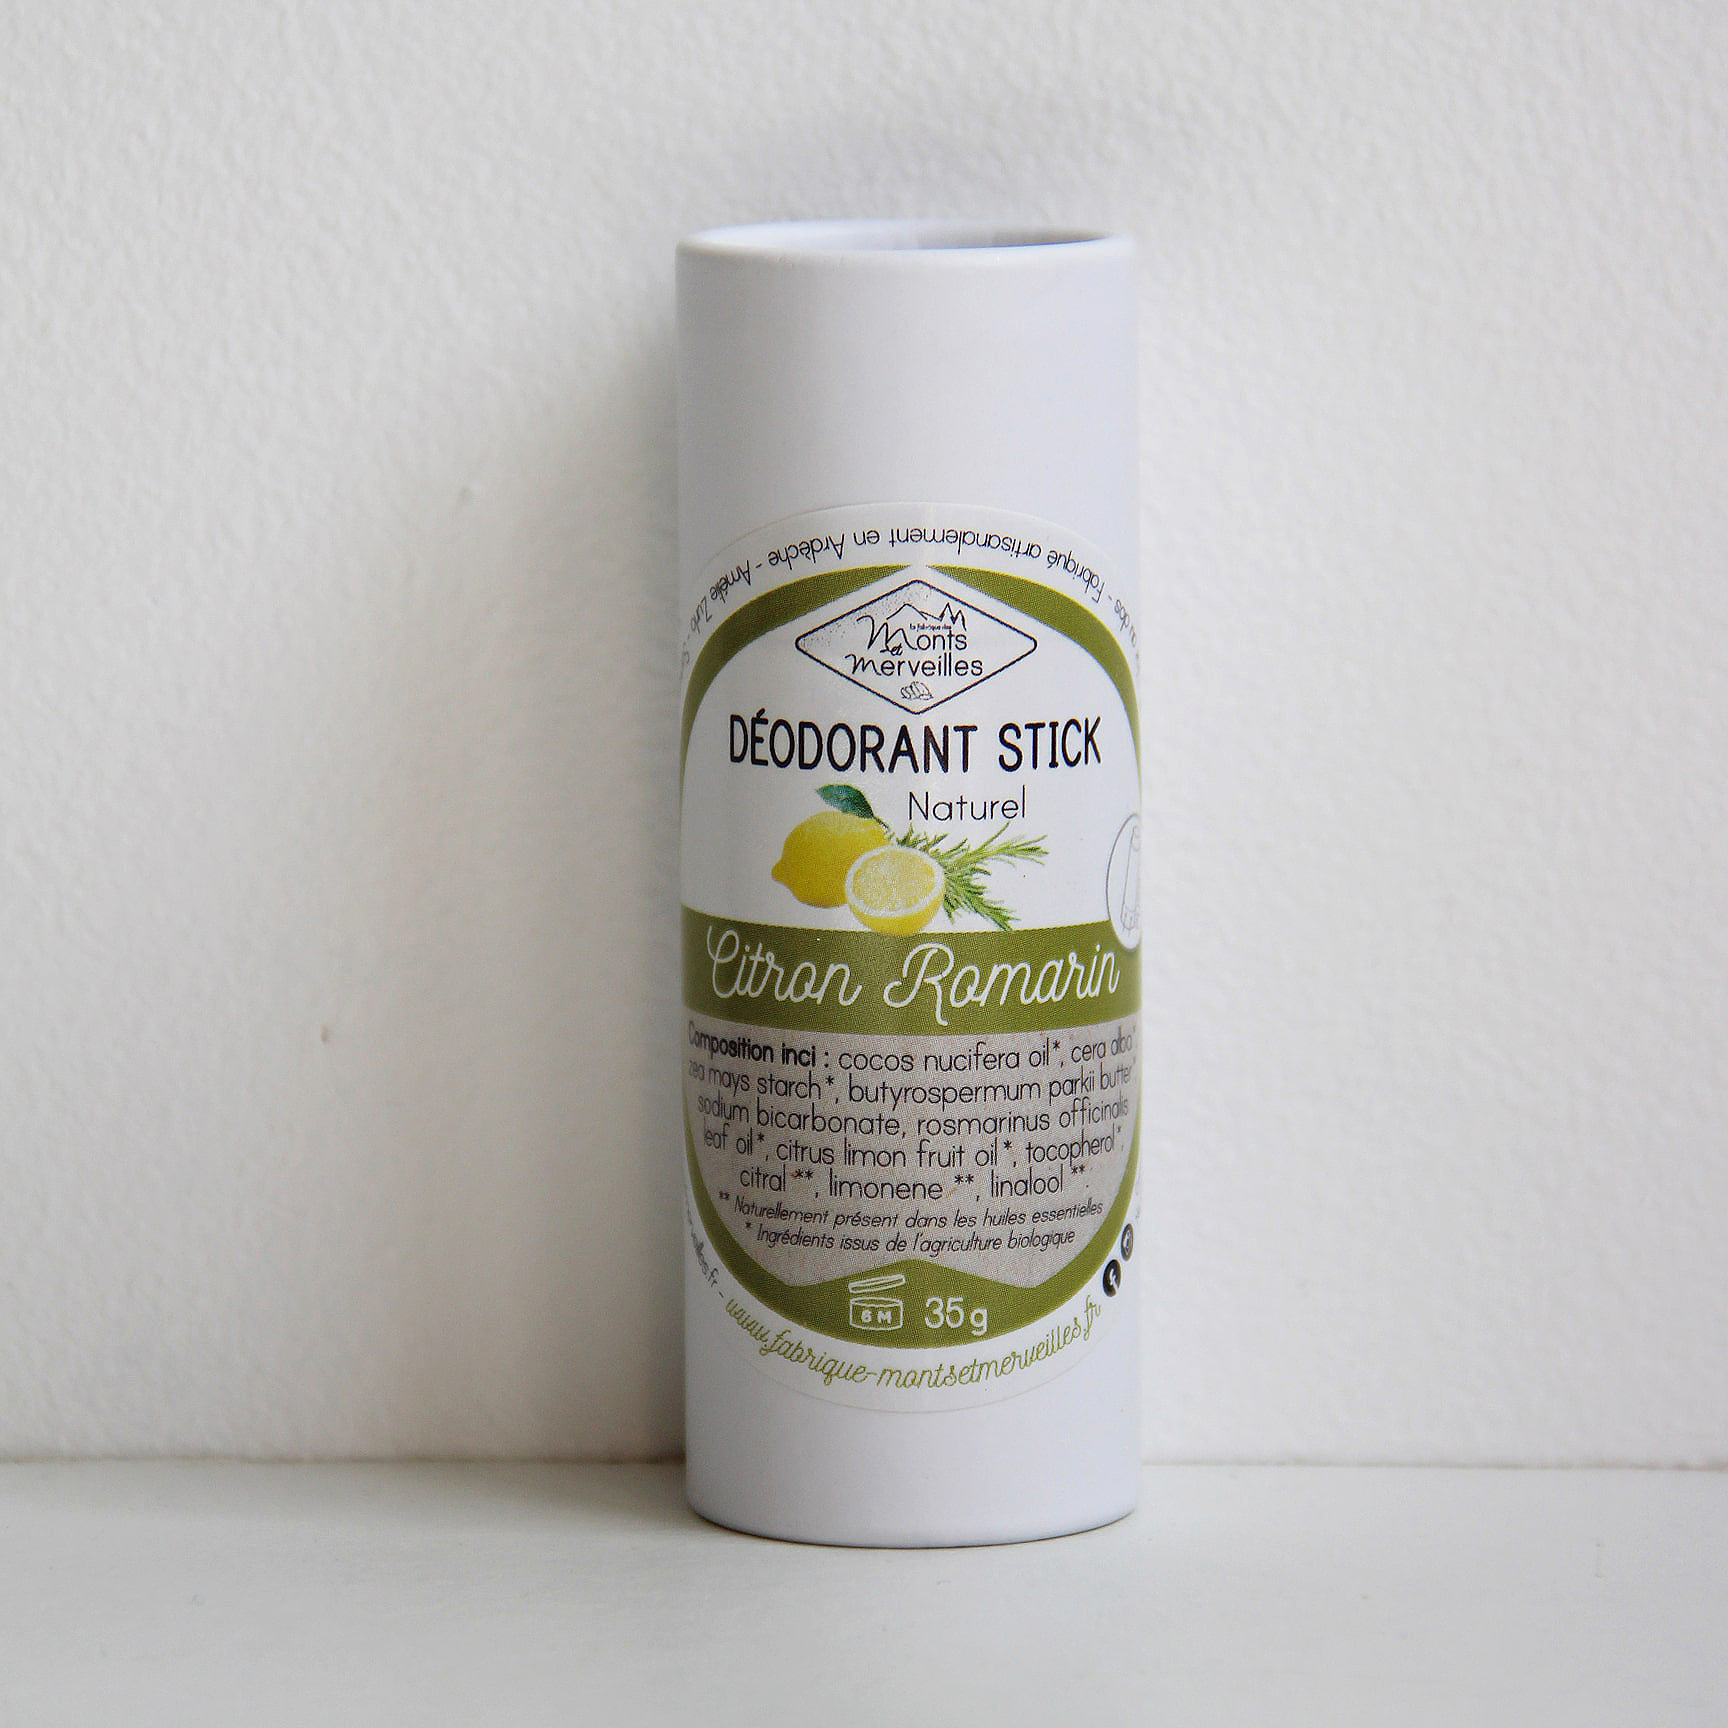 Déodorant solide naturel en STICK Citron Romarin – 35g